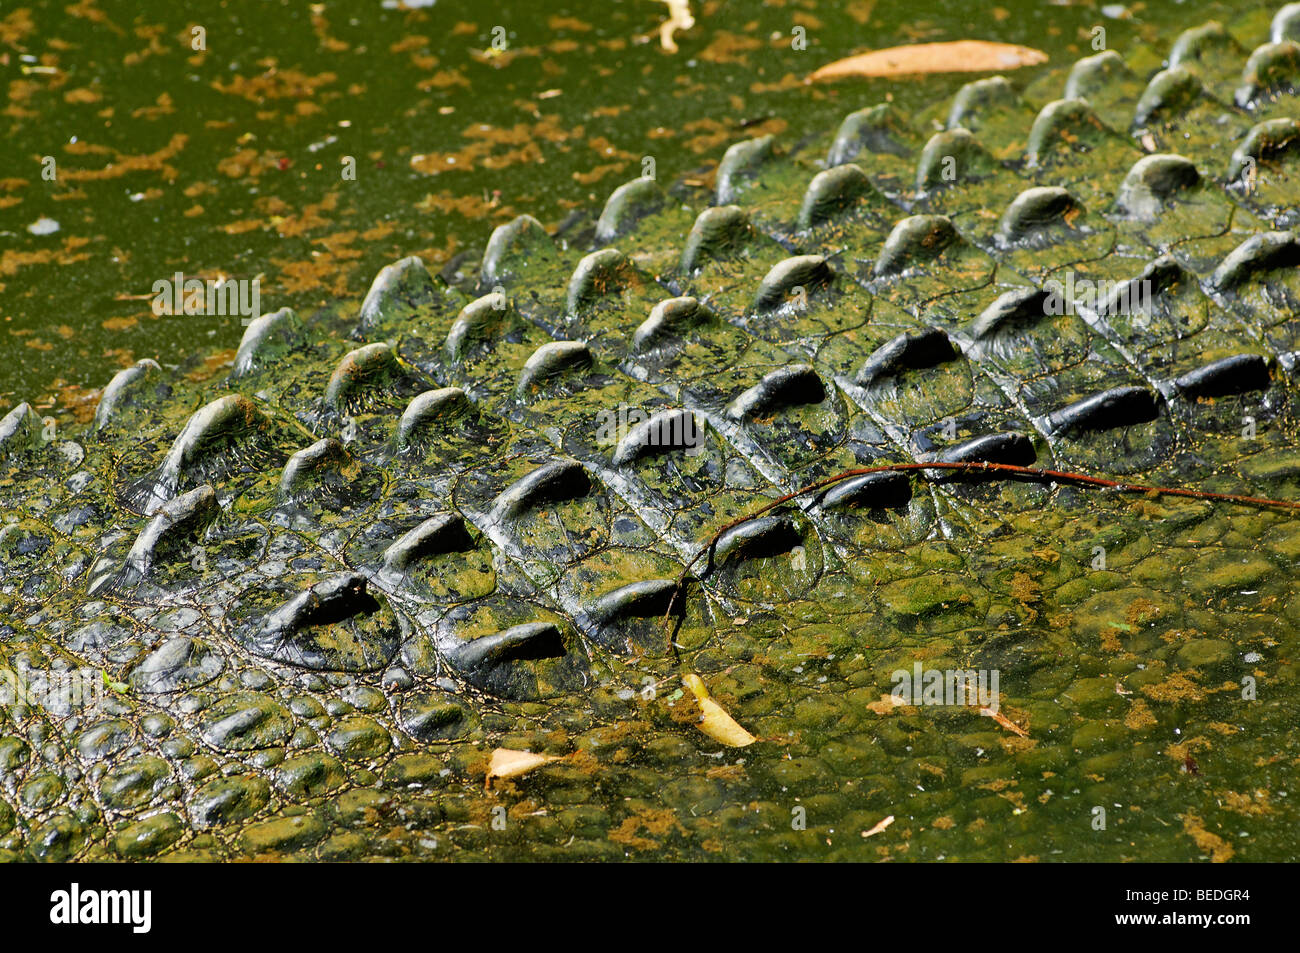 Scales of a Saltwater Crocodile (Crocodylus porosus), Queensland, Australia Stock Photo